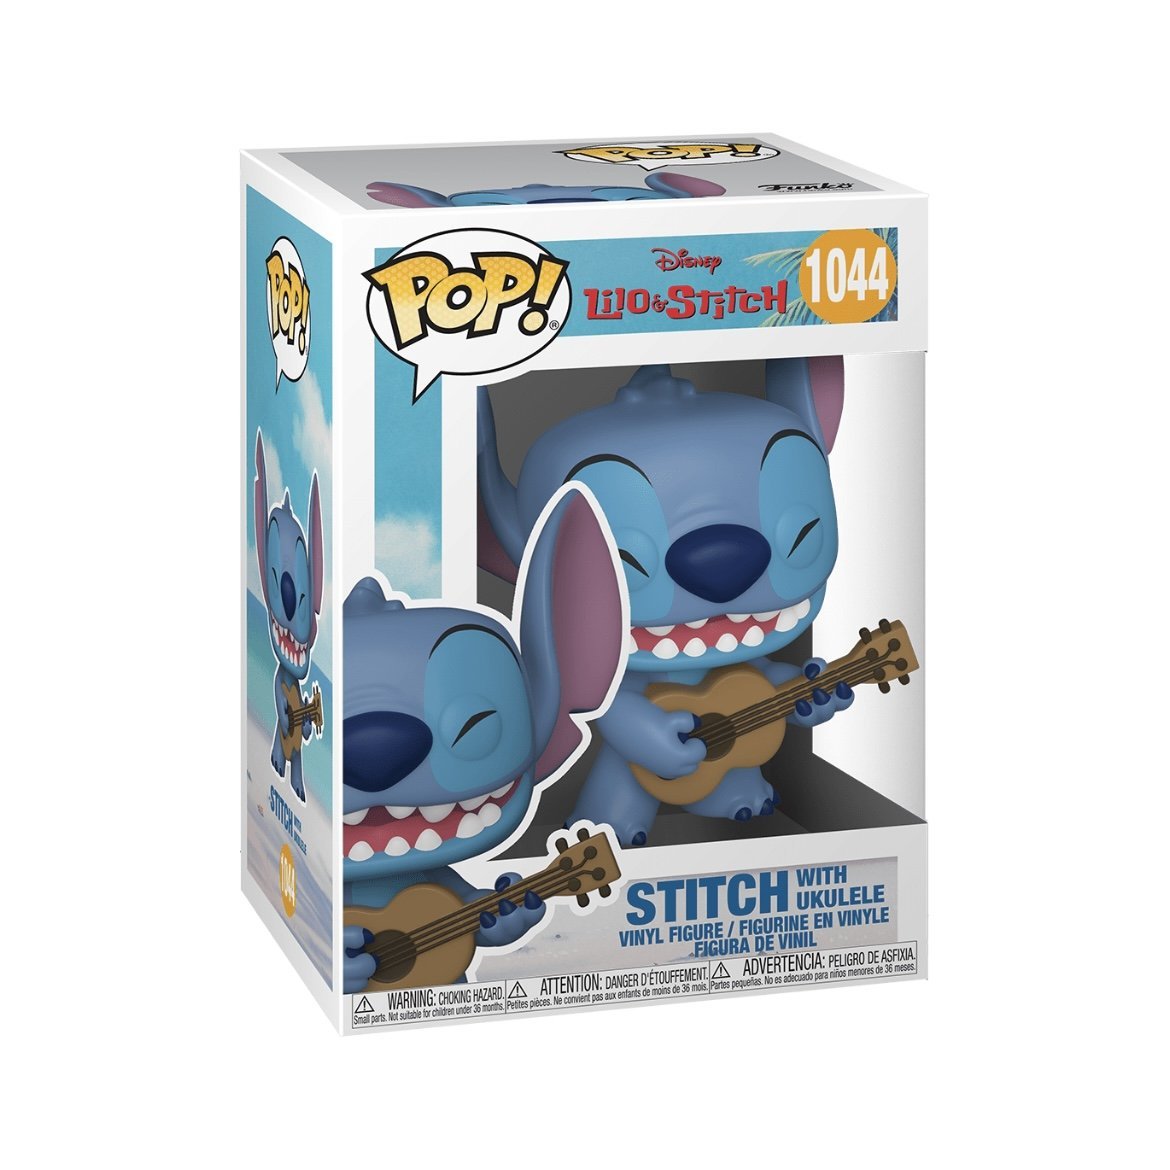 Stitch with Frog Special Edition 986 Figure, Disney Lilo & Stitch Figure